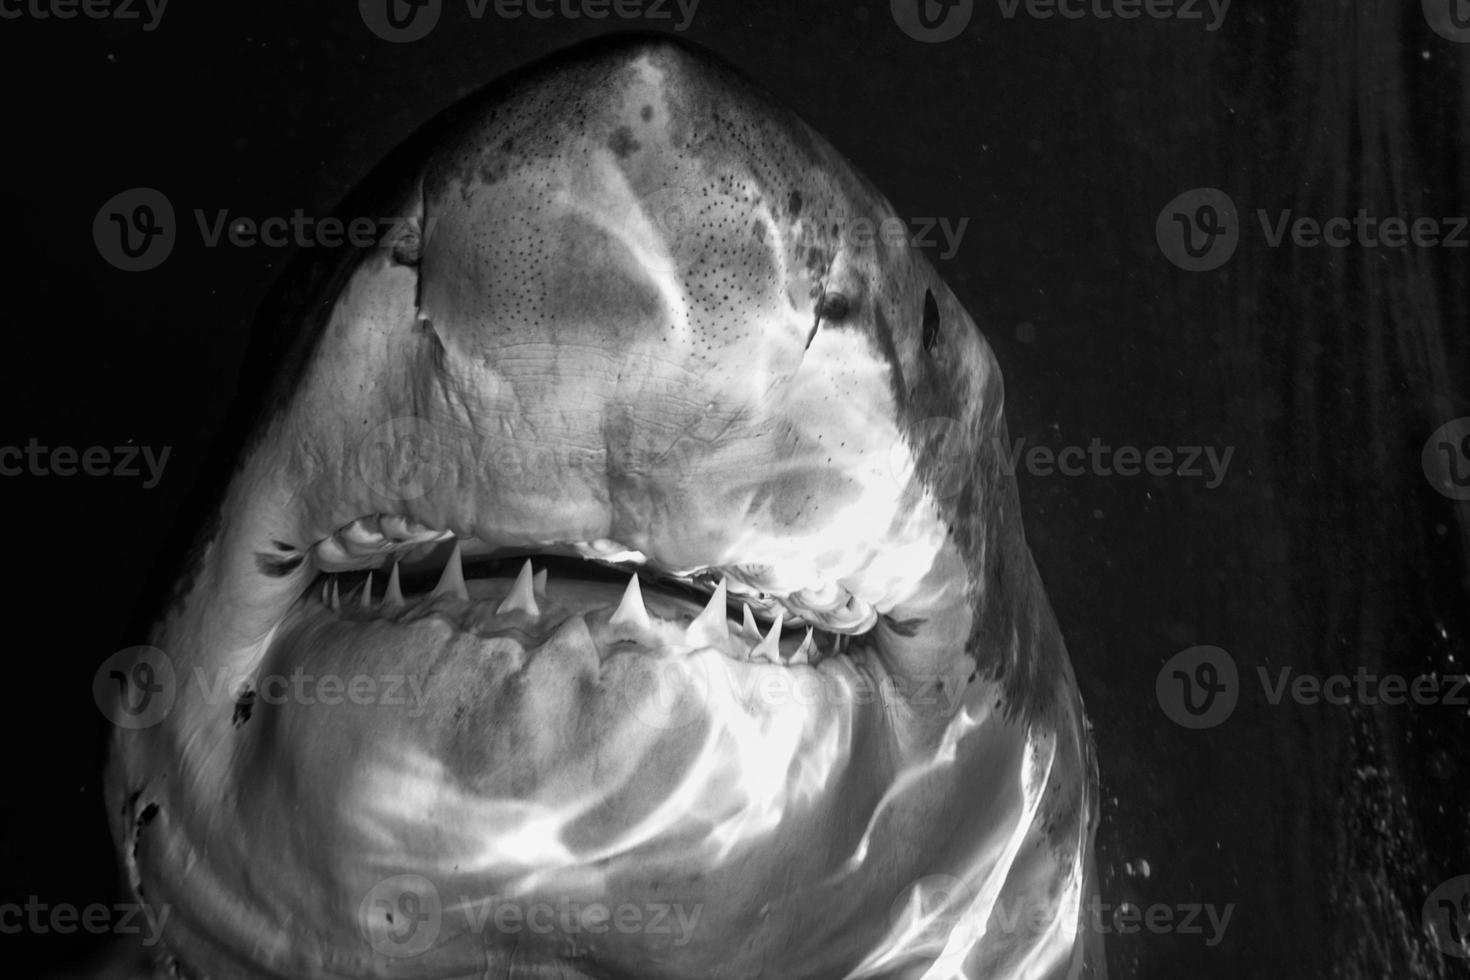 Great White shark attack photo